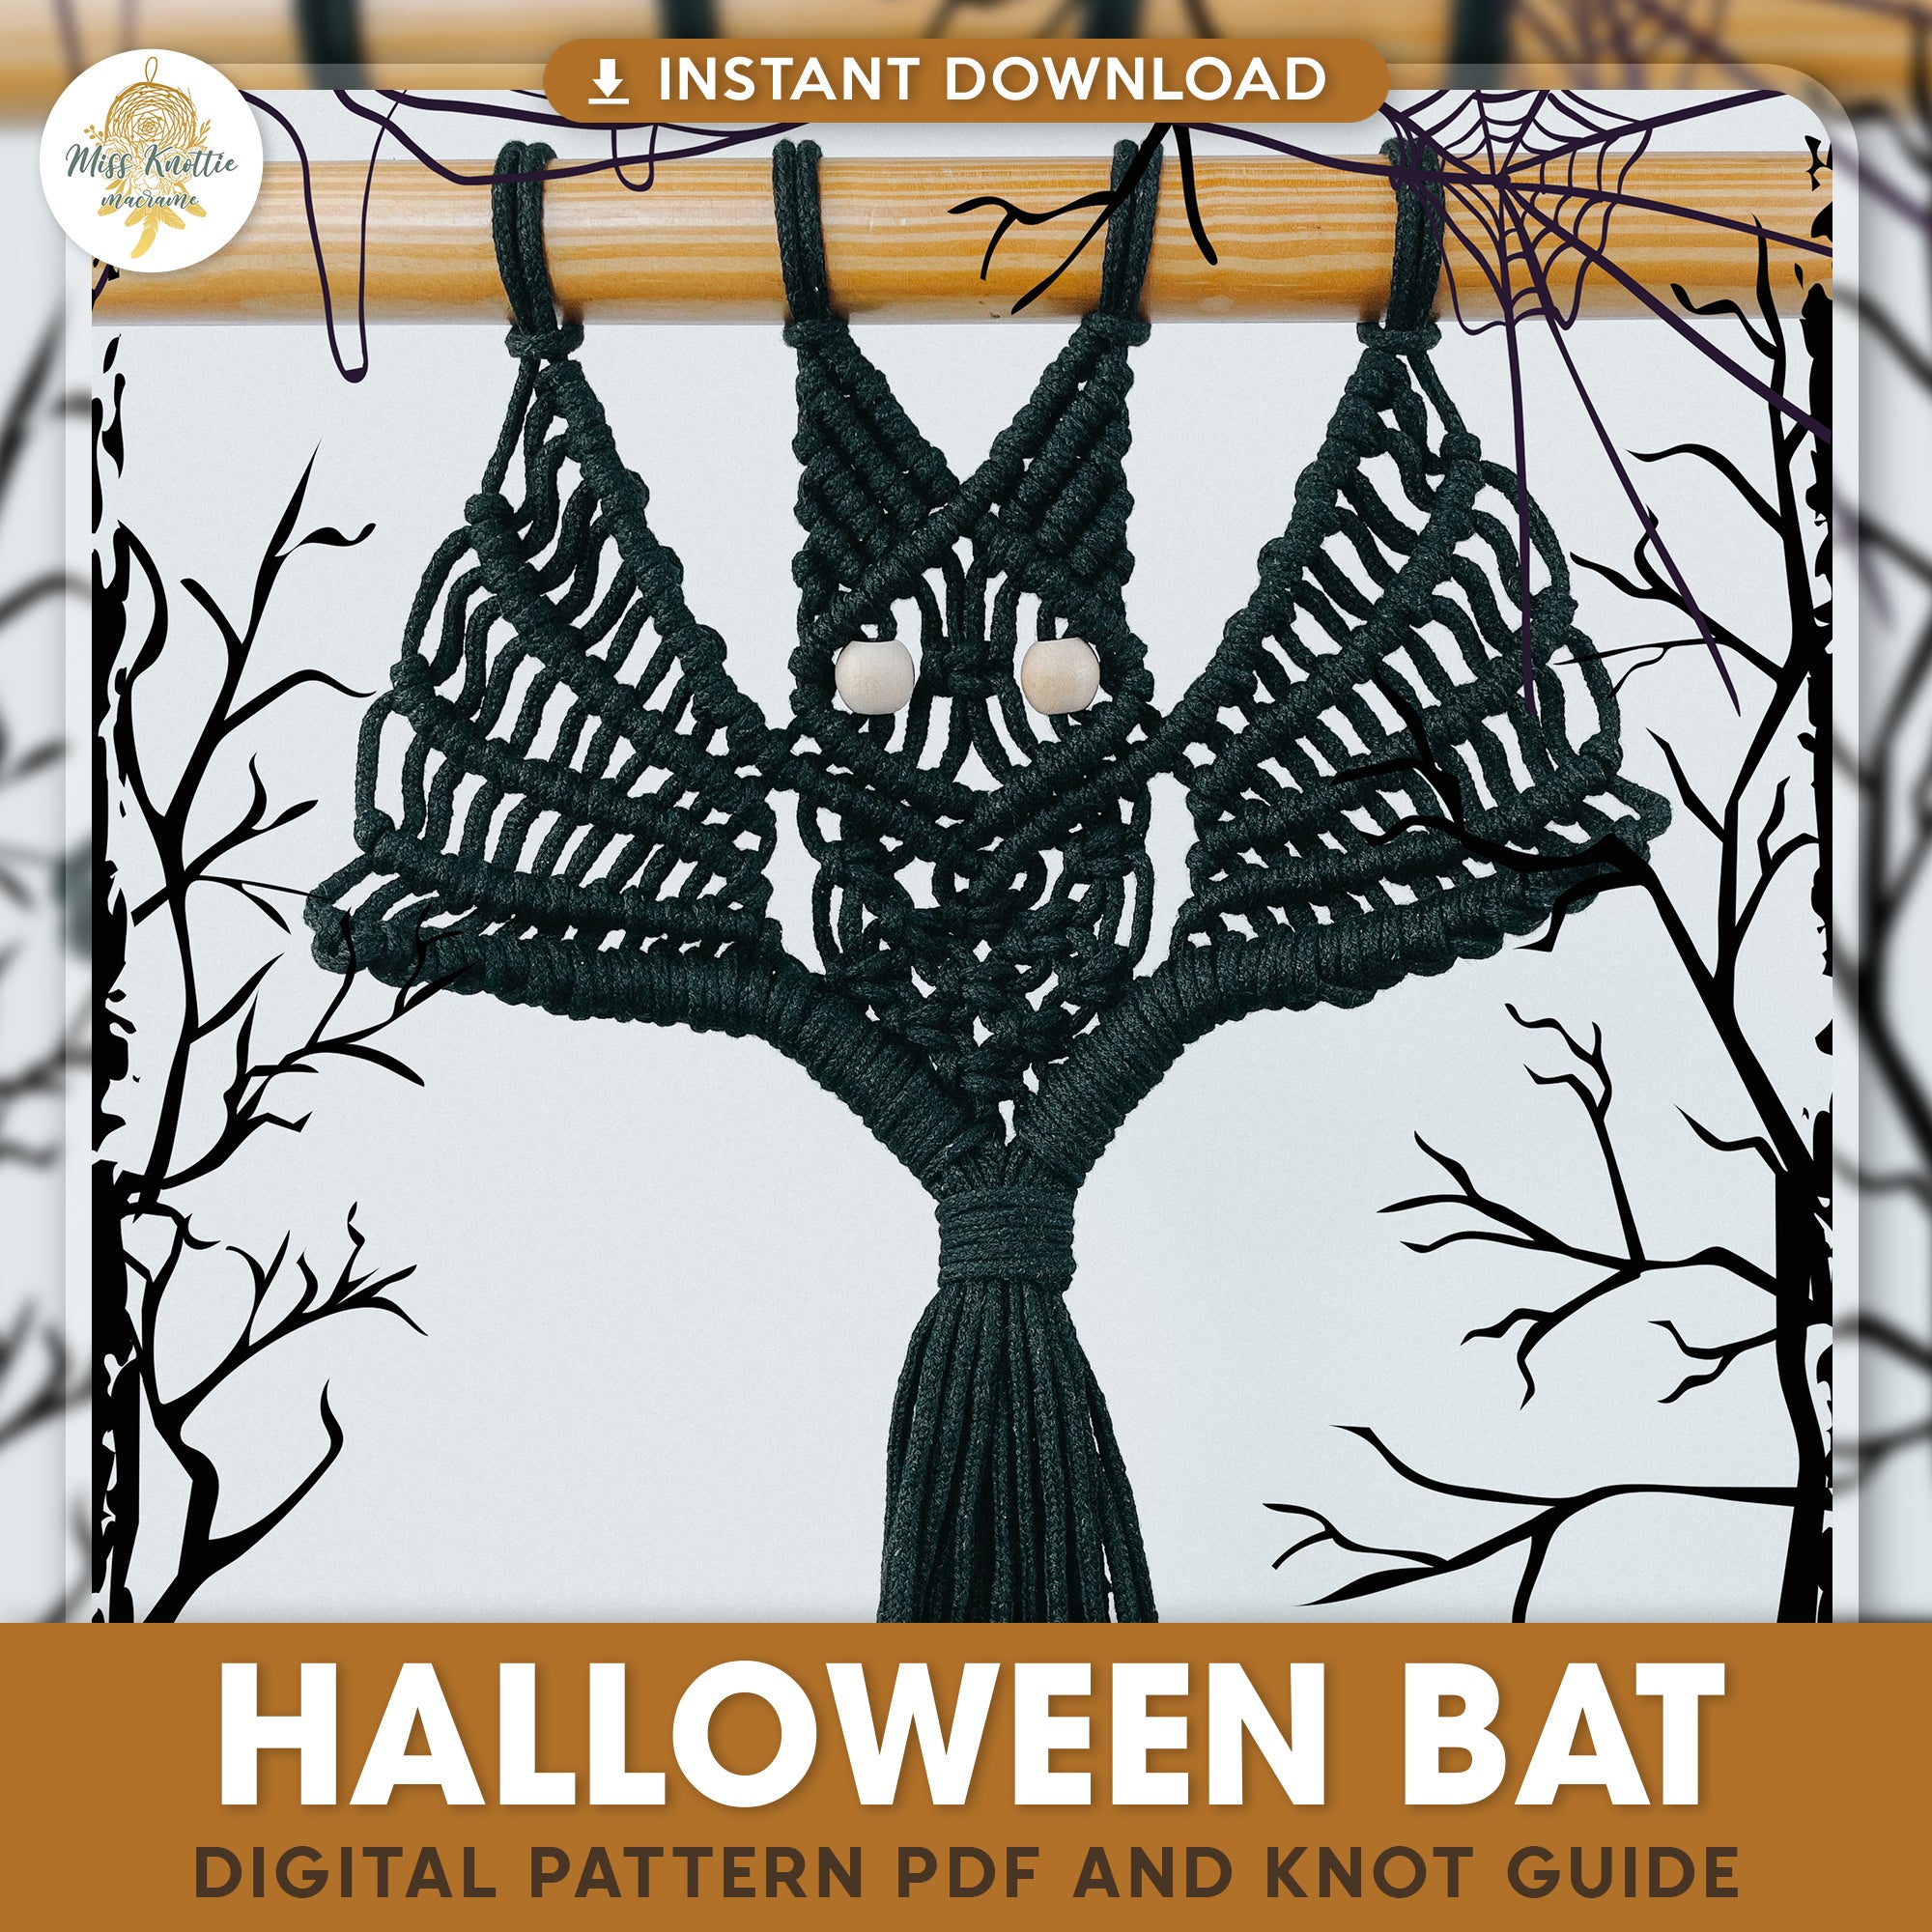 Halloween Bat - Digital Pattern PDF and Knot Guide